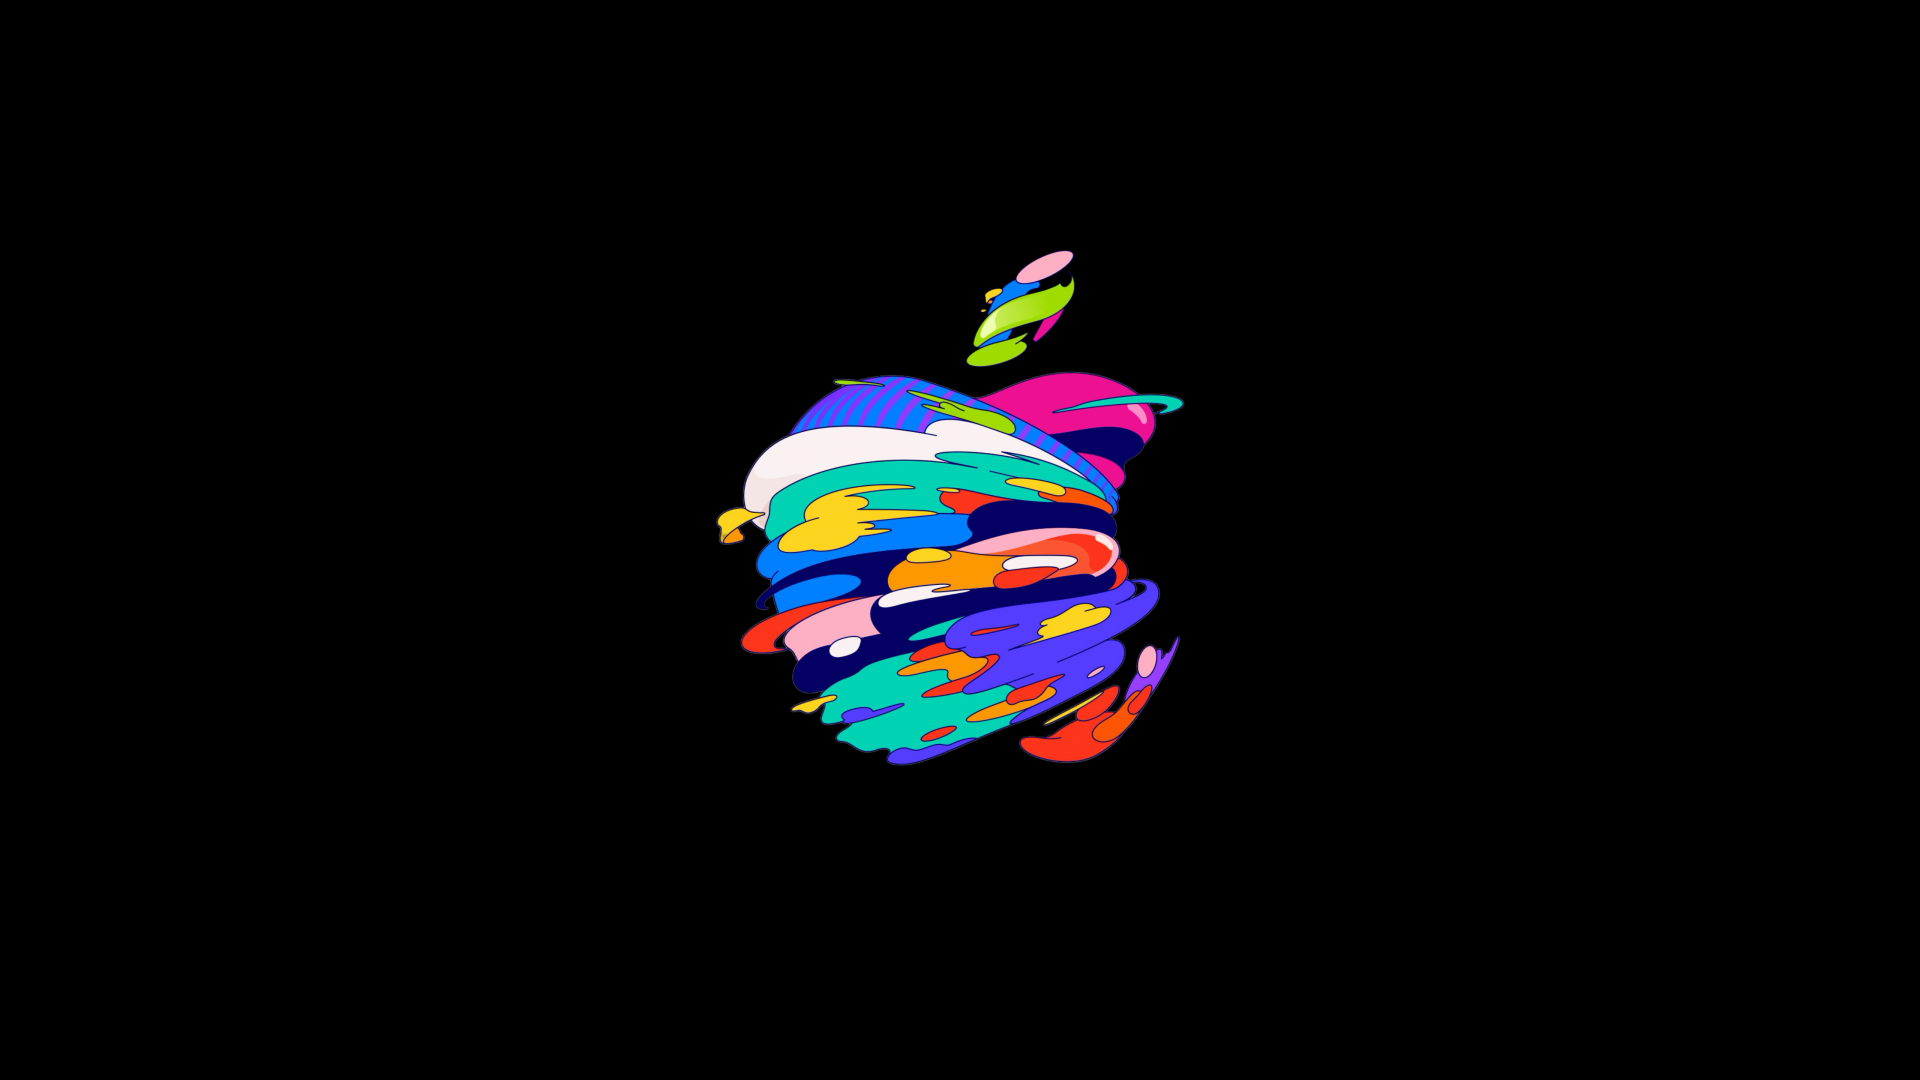 Apple logo Wallpaper 4K, Mac, Black background, Technology, #7971